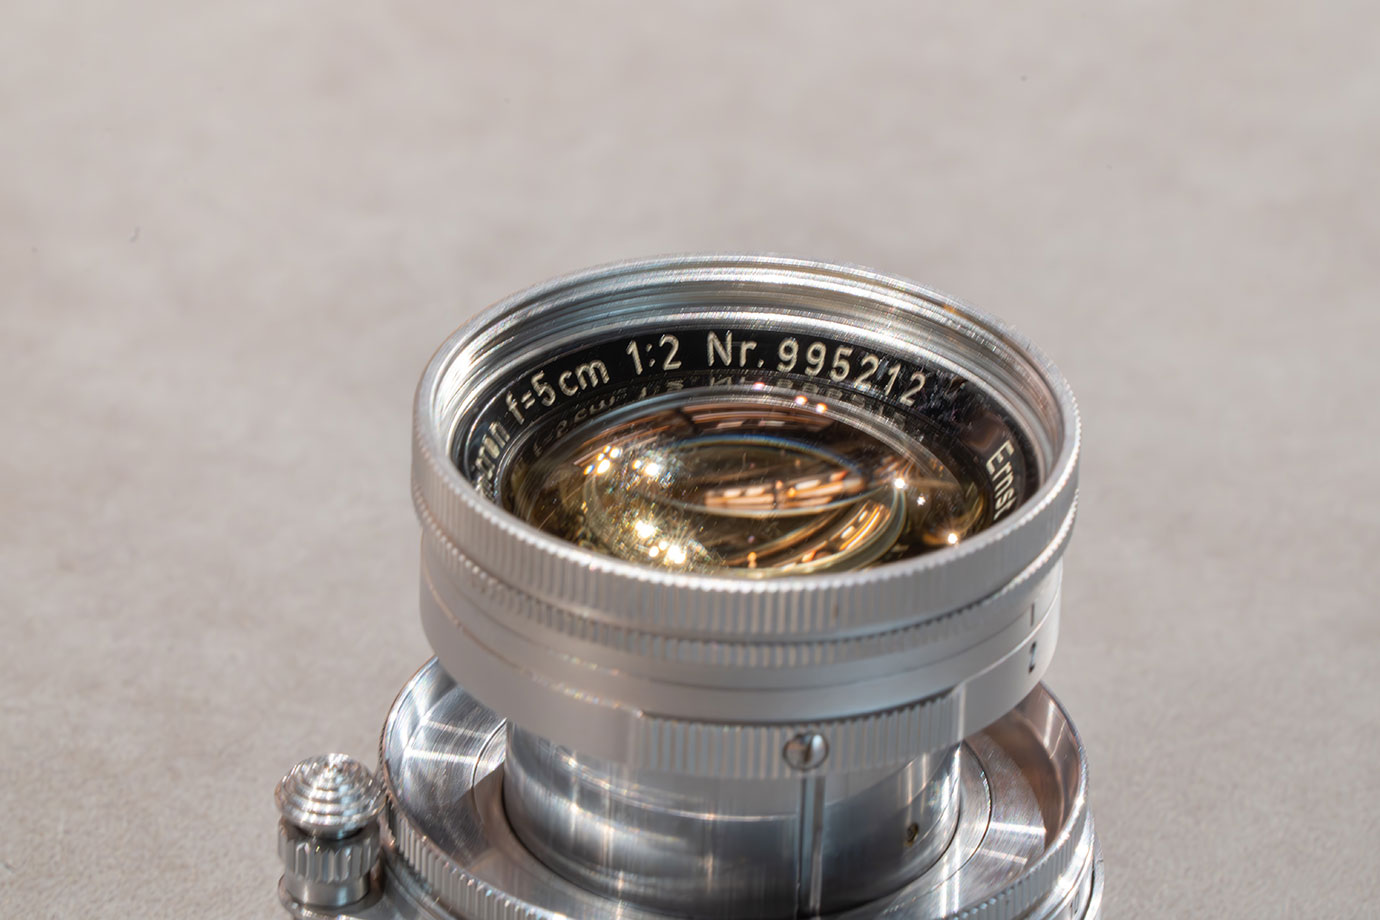 Leica Summicron L 50mm f/2 Radioactive No.995212